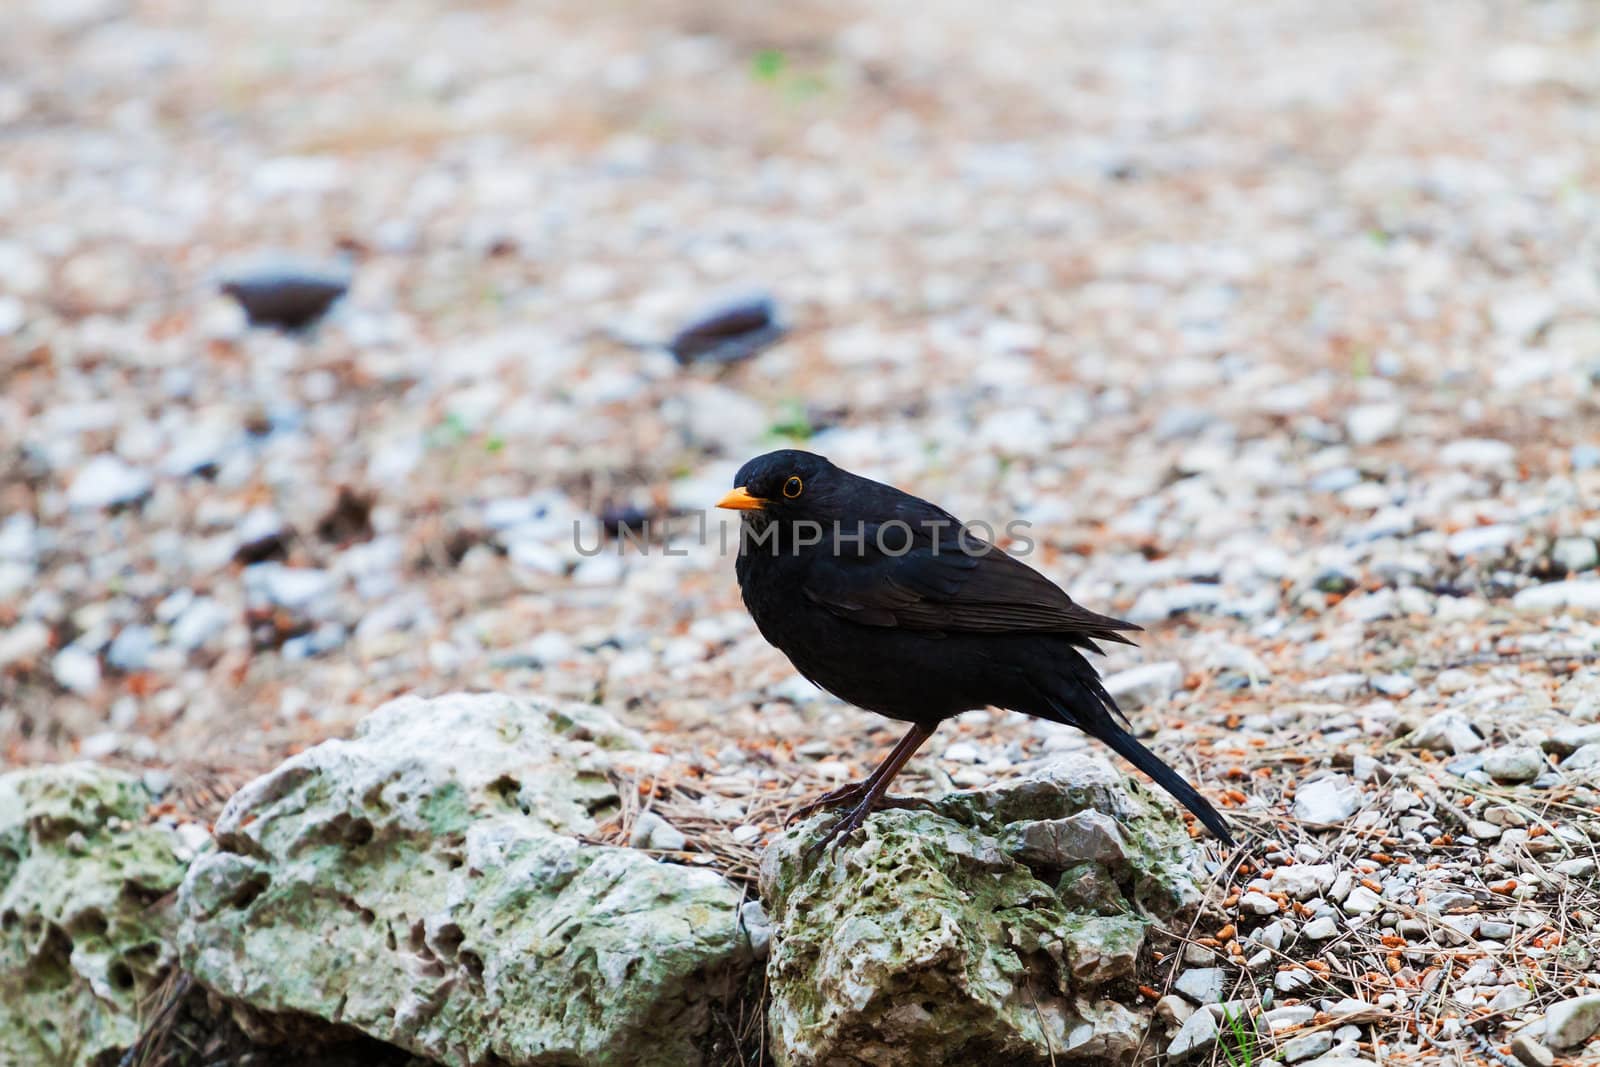 Common blackbird (Turdus merula) by Lamarinx